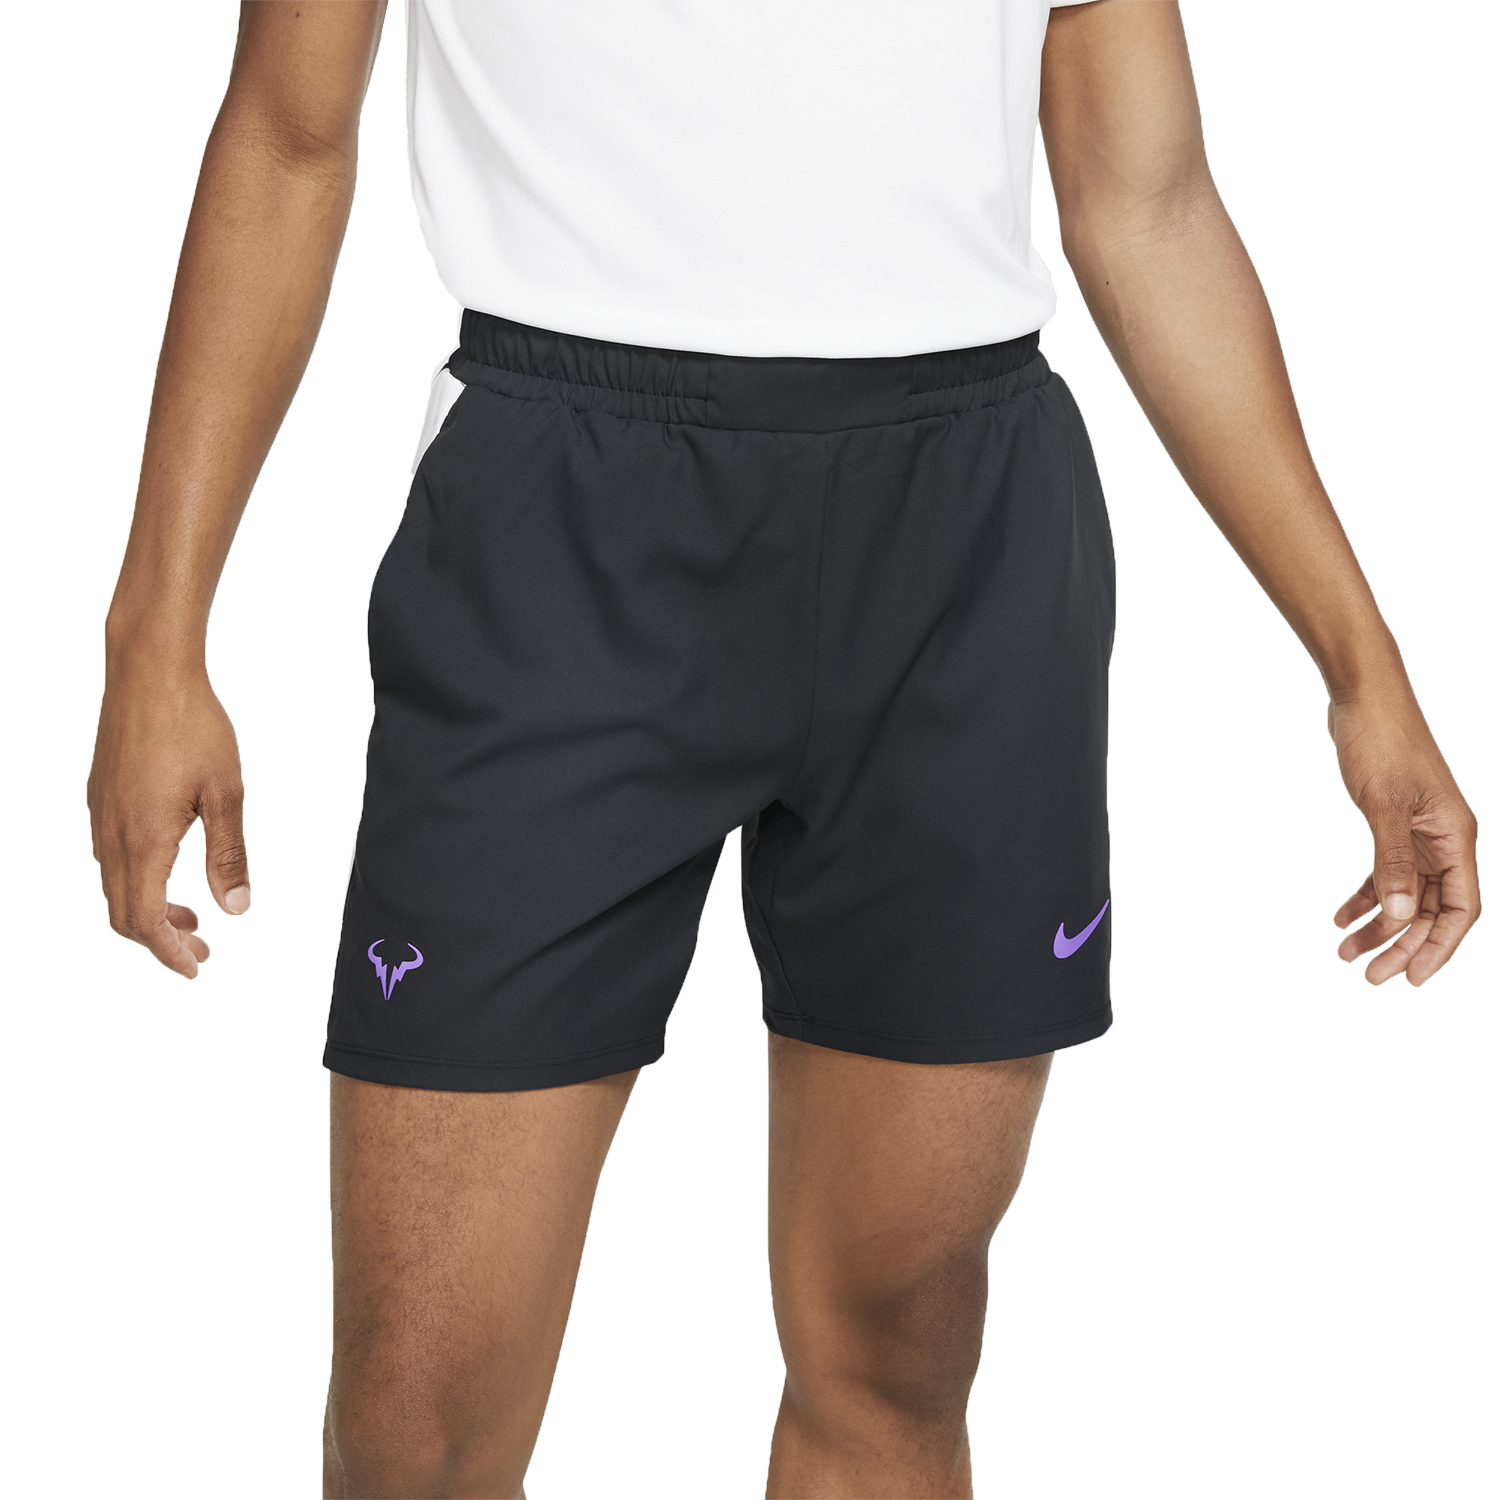 nike tennis shorts 7 inch